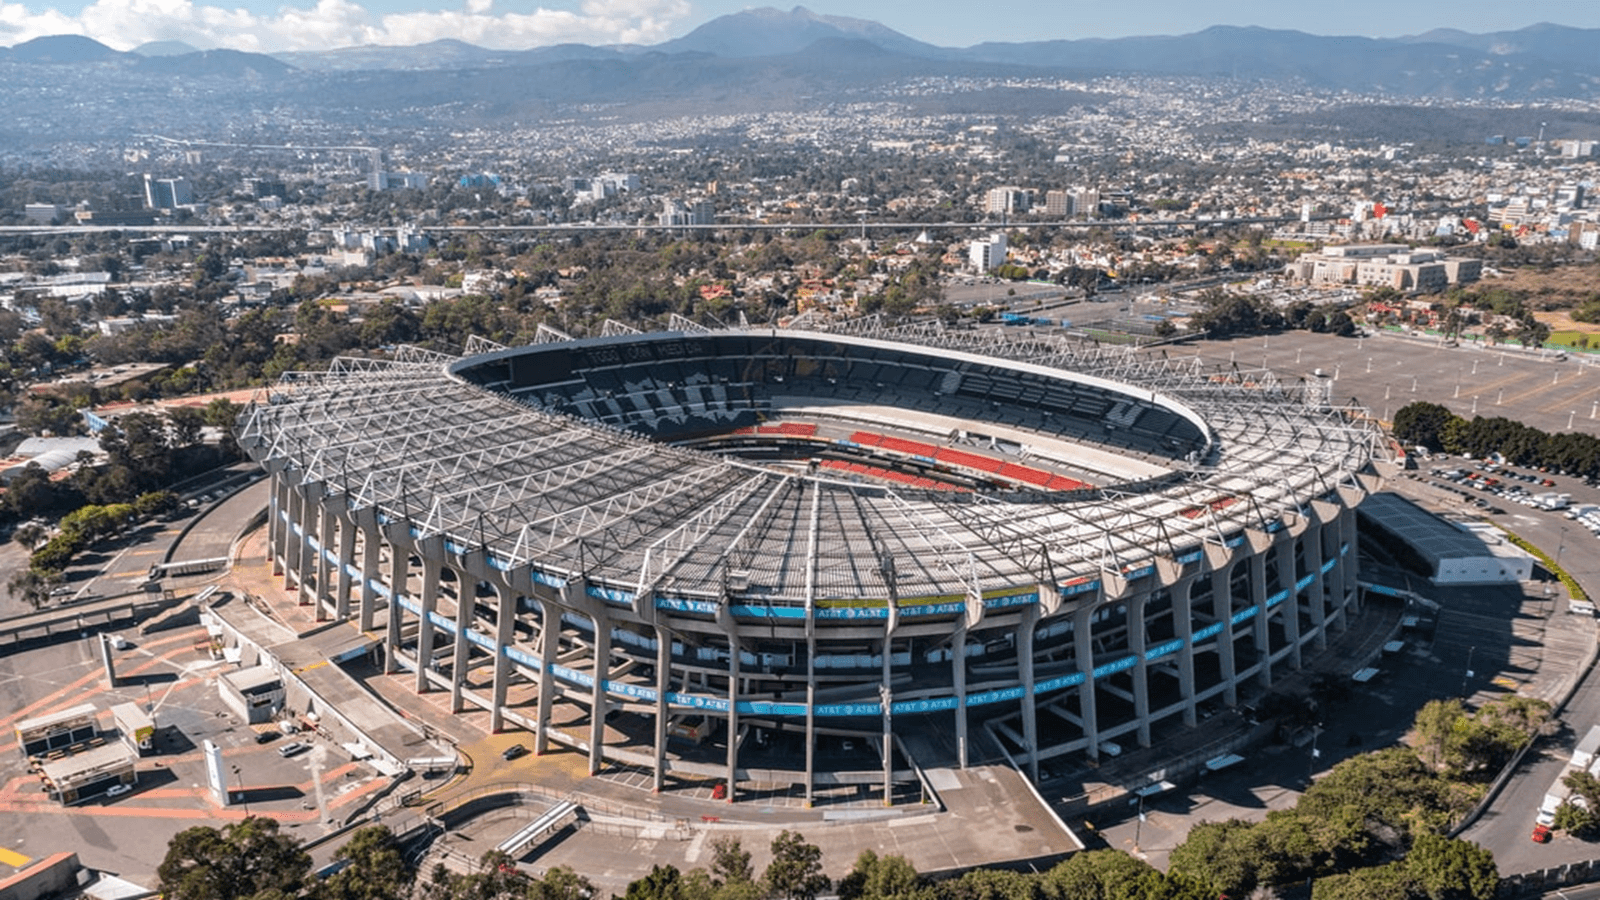 The Aztec Football stadium